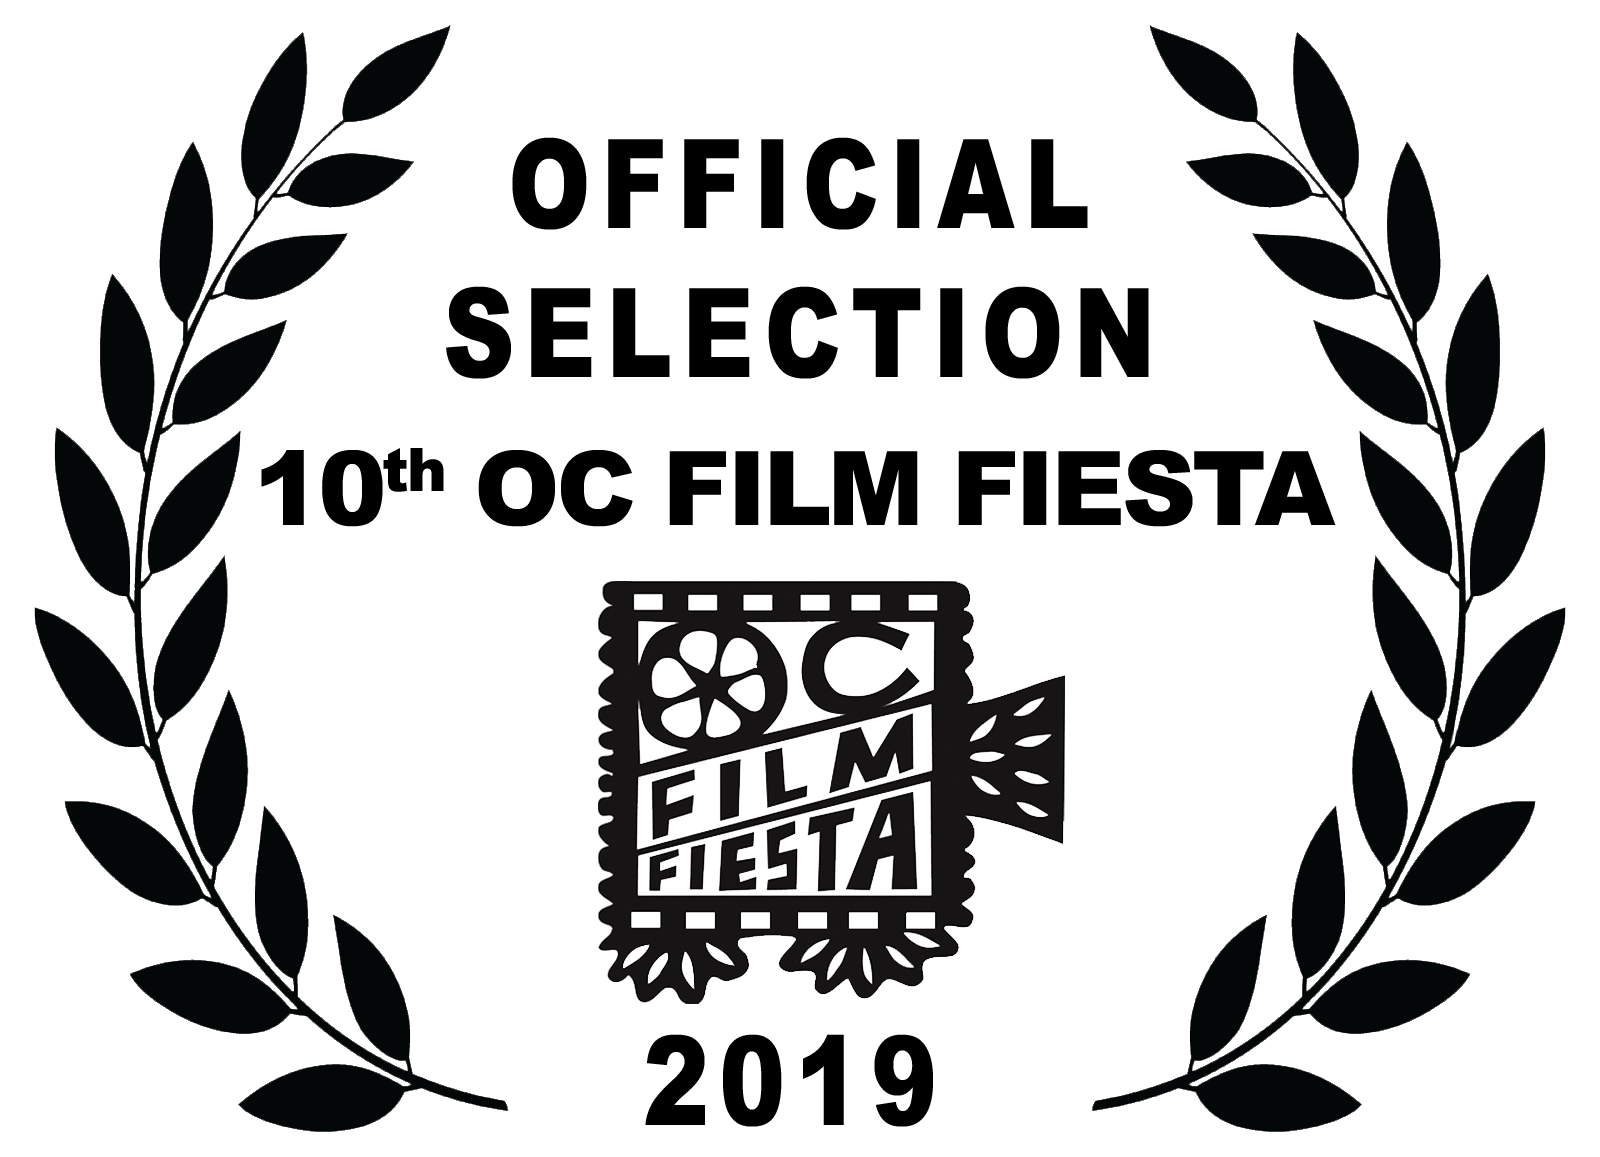 2019 10th FilmFiestaOfficialSelectionTransparent.png